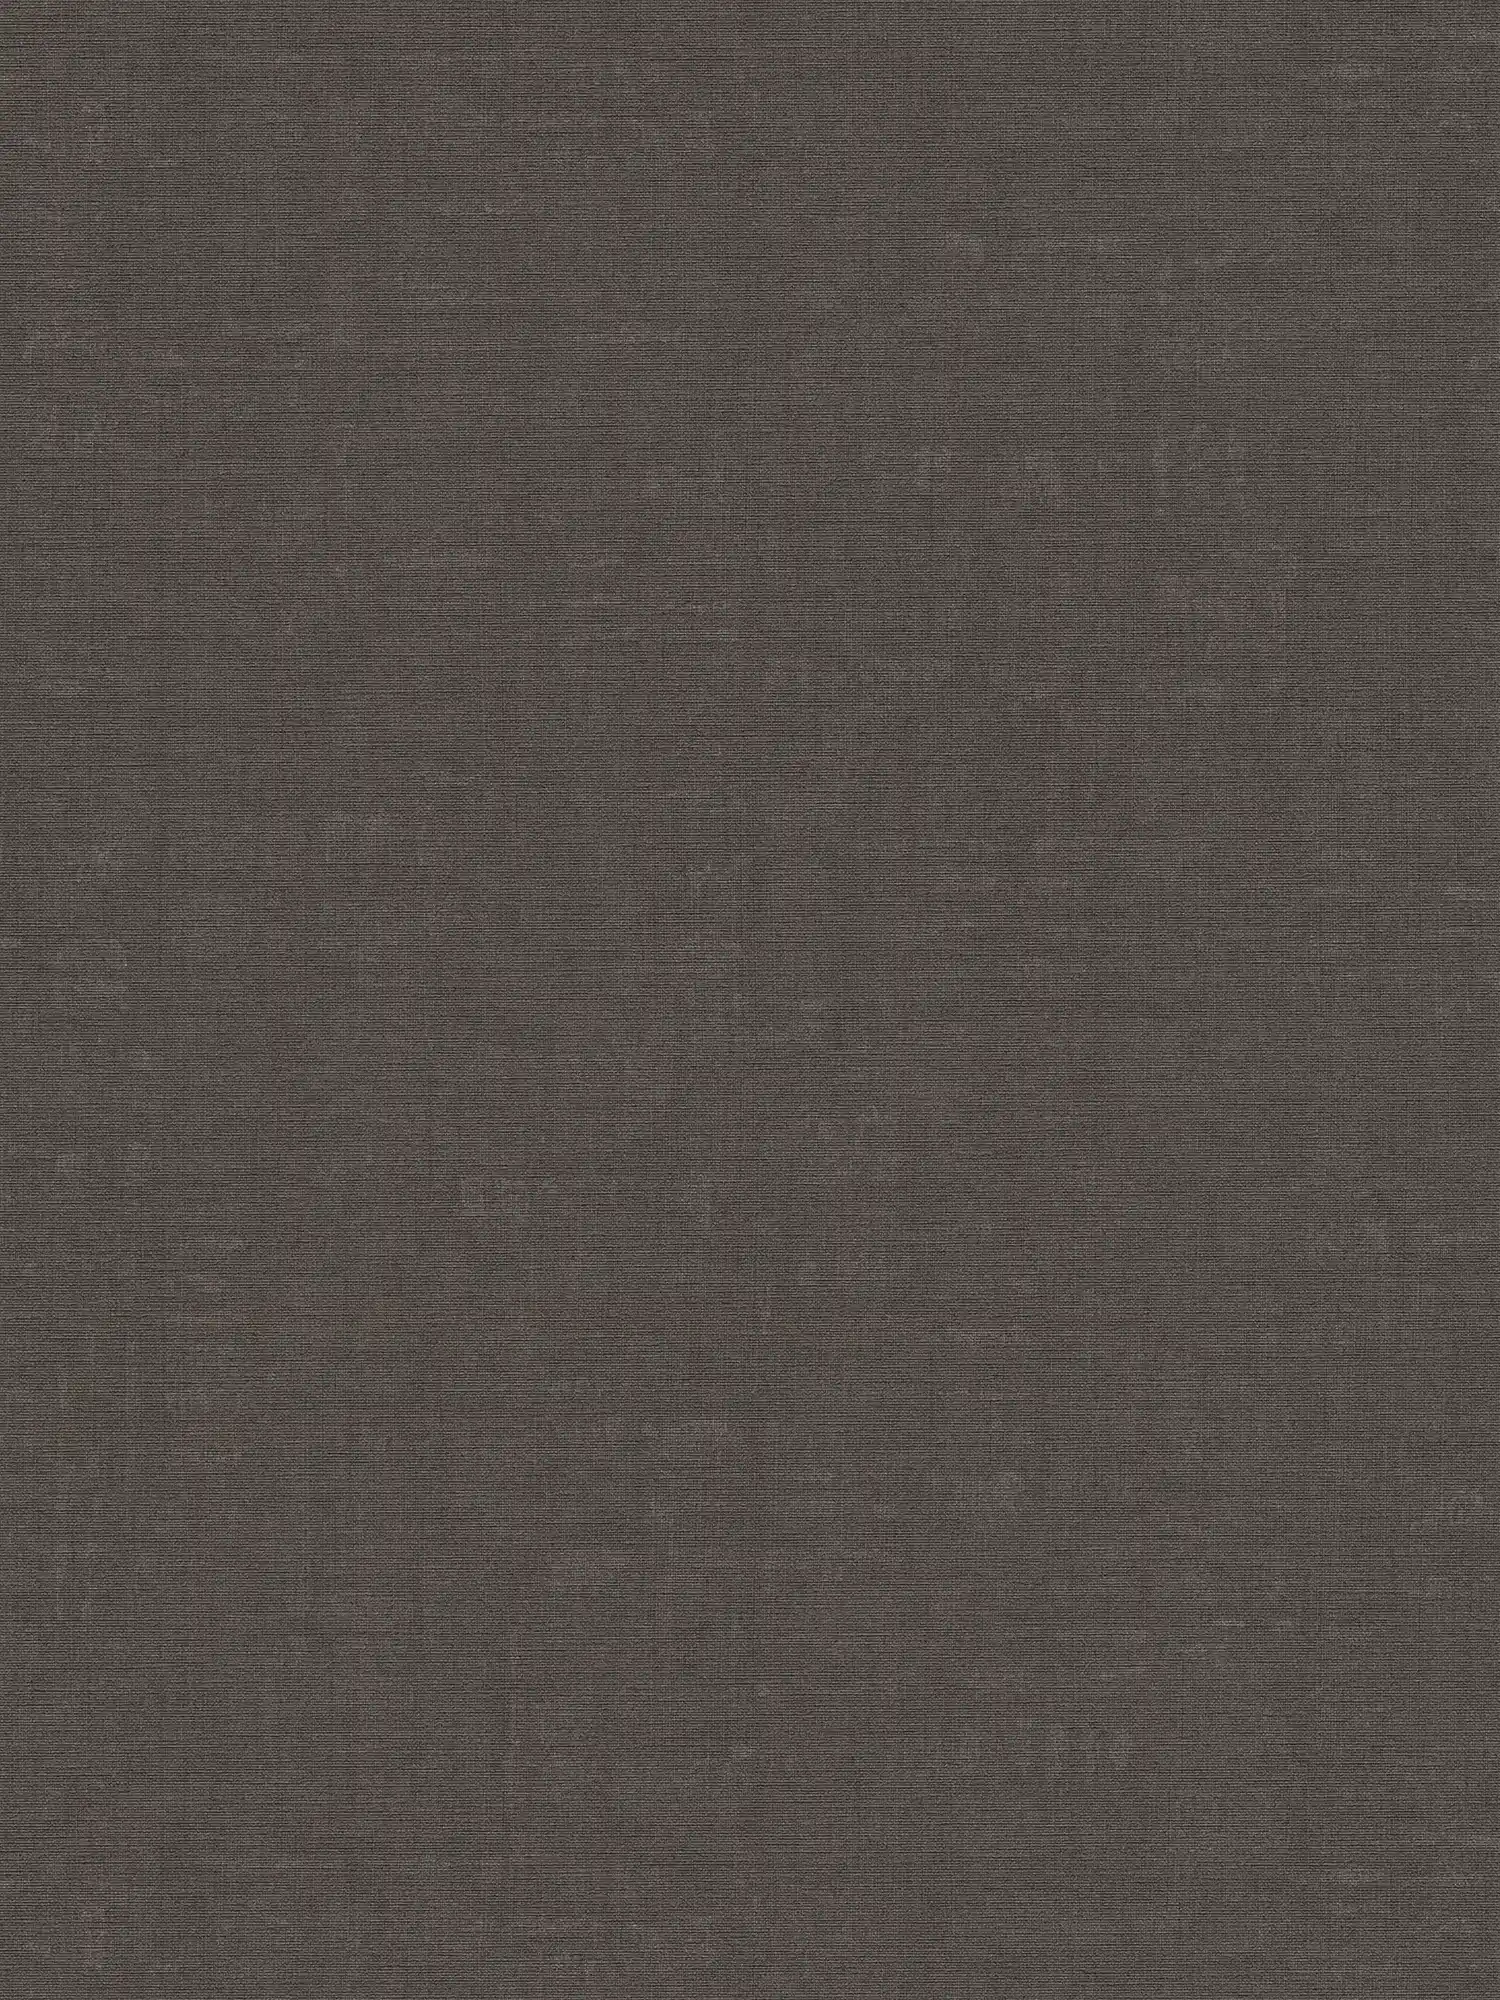 Melange wallpaper plain with structure design - grey, black
